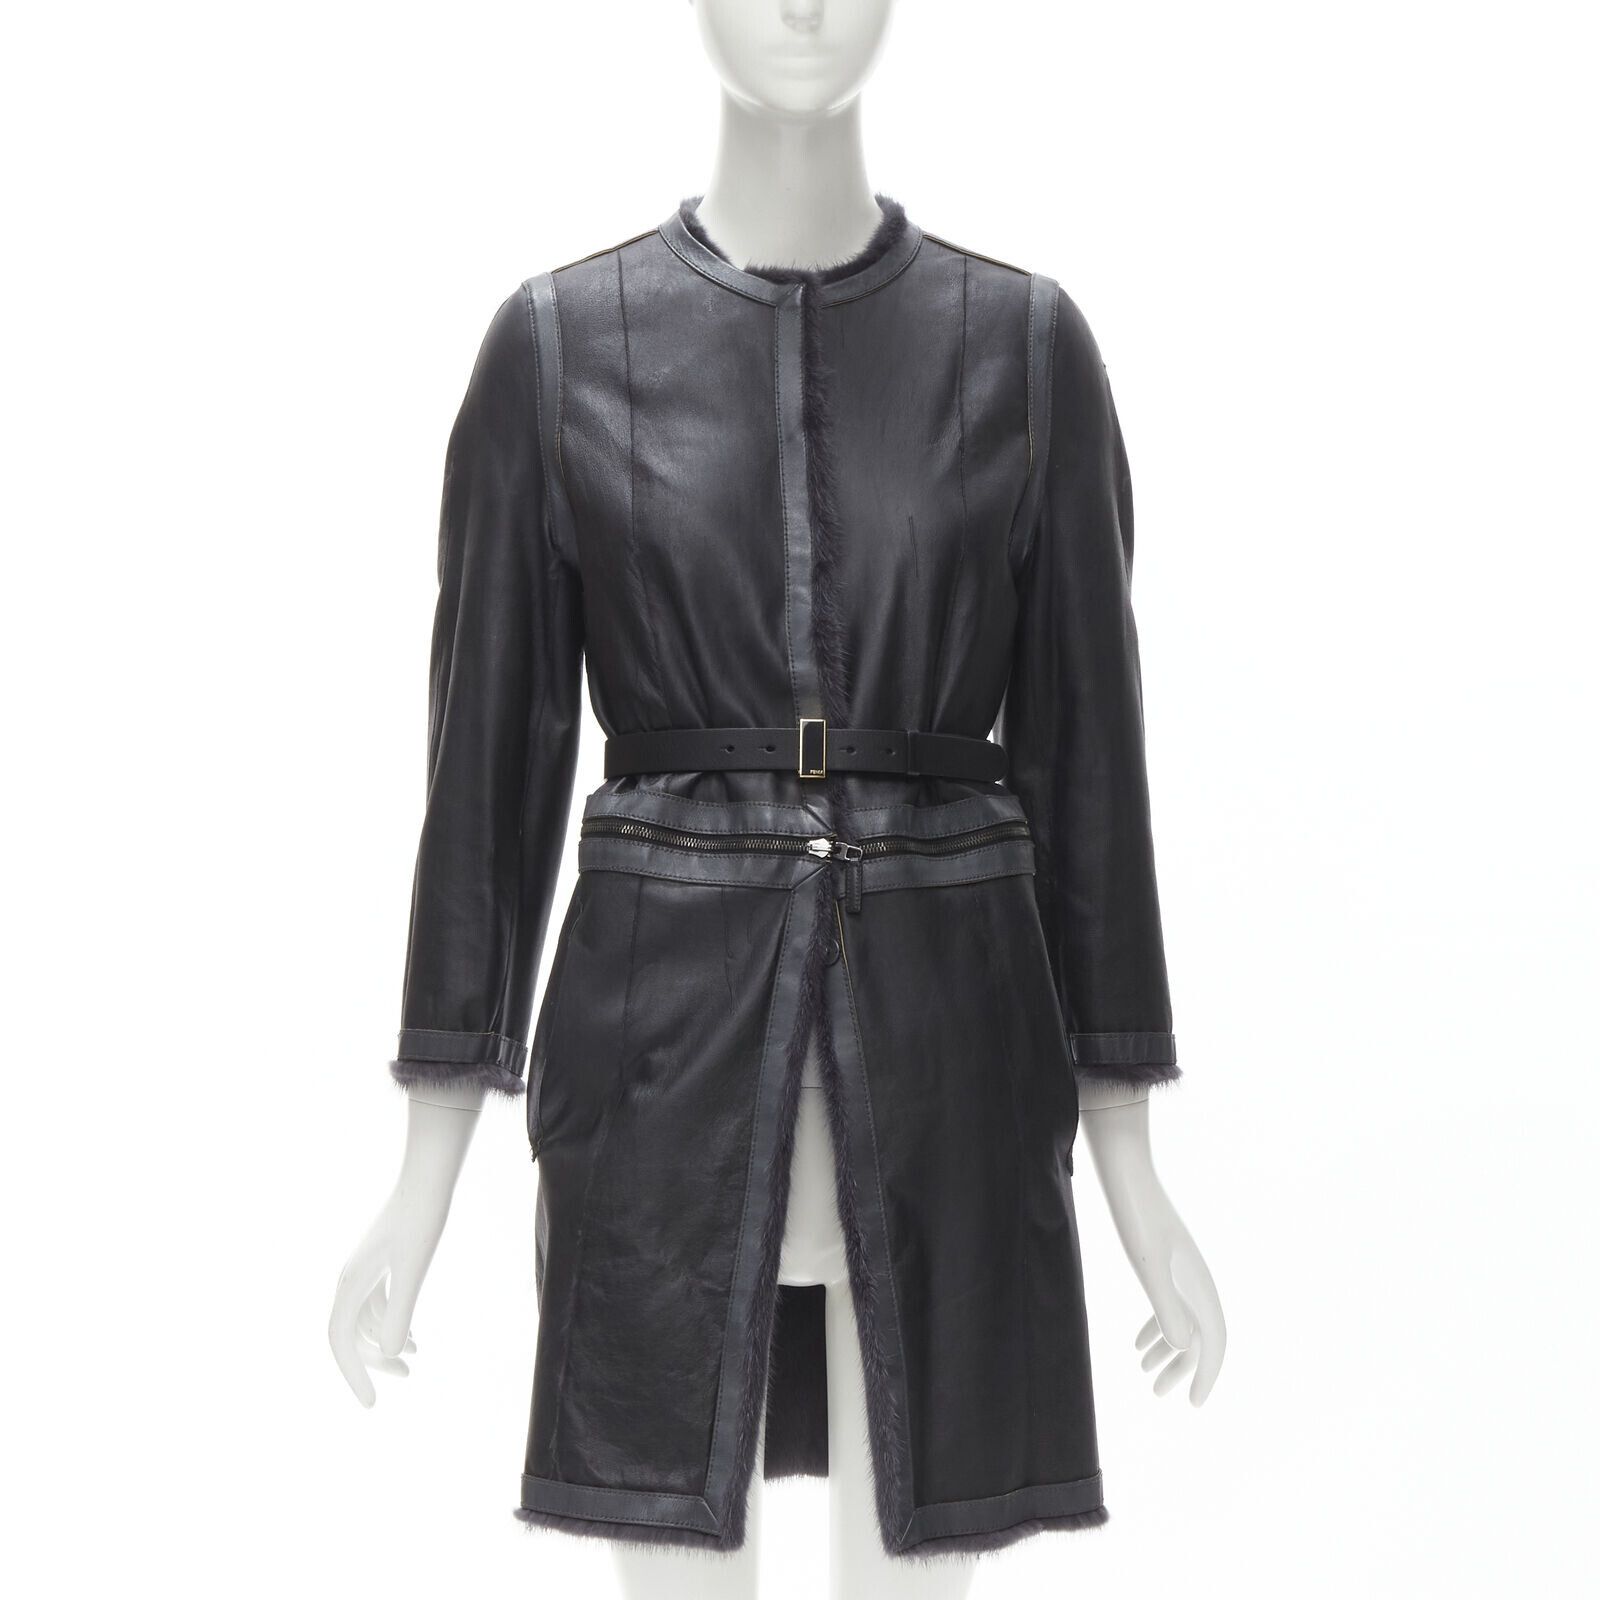 Fendi FENDI grey black fur leather 4-way reversible zip belted coat jacket IT38 Size XS / US 0-2 / IT 36-38 - 2 Preview